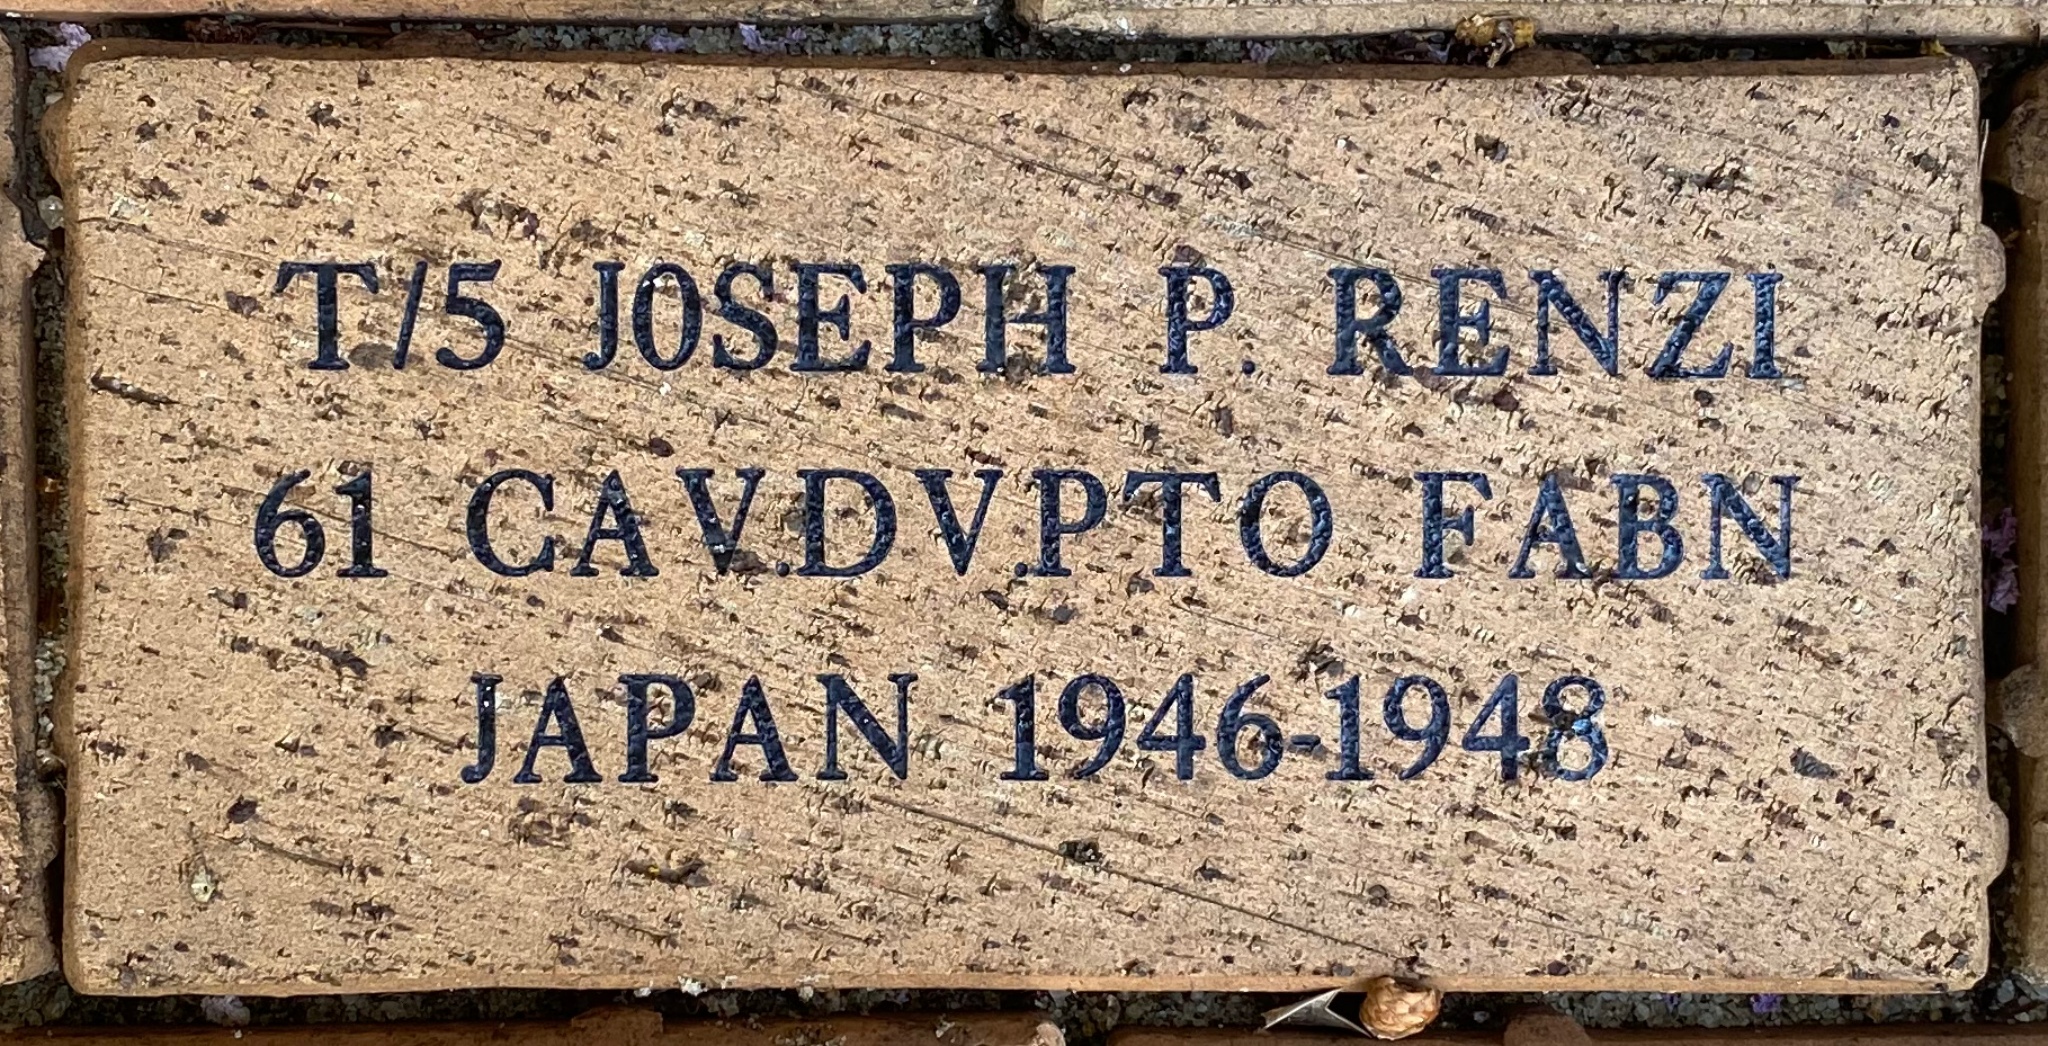 T/5 JOSEPH P. RENZI 61 CAV.DV.PTO FABN JAPAN 1946-1948